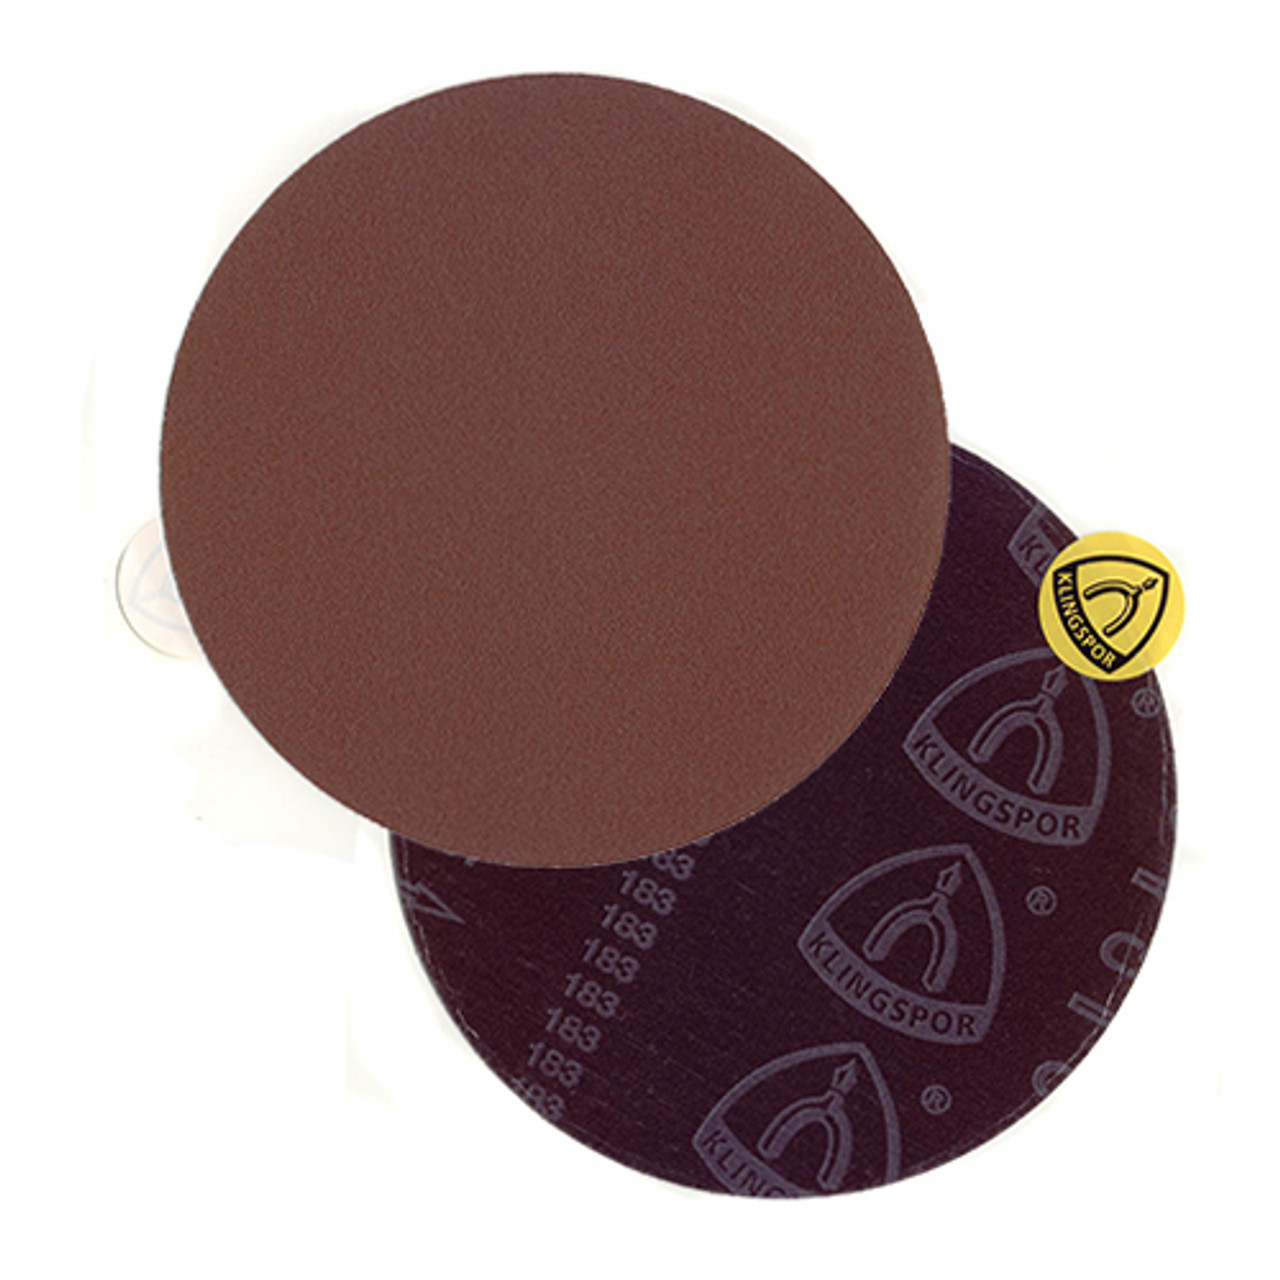 Klingspor Abrasives 8" No Hole, Cloth Backed, Pressure Sensitive Adhesive, 180 Grit Discs, 5pk